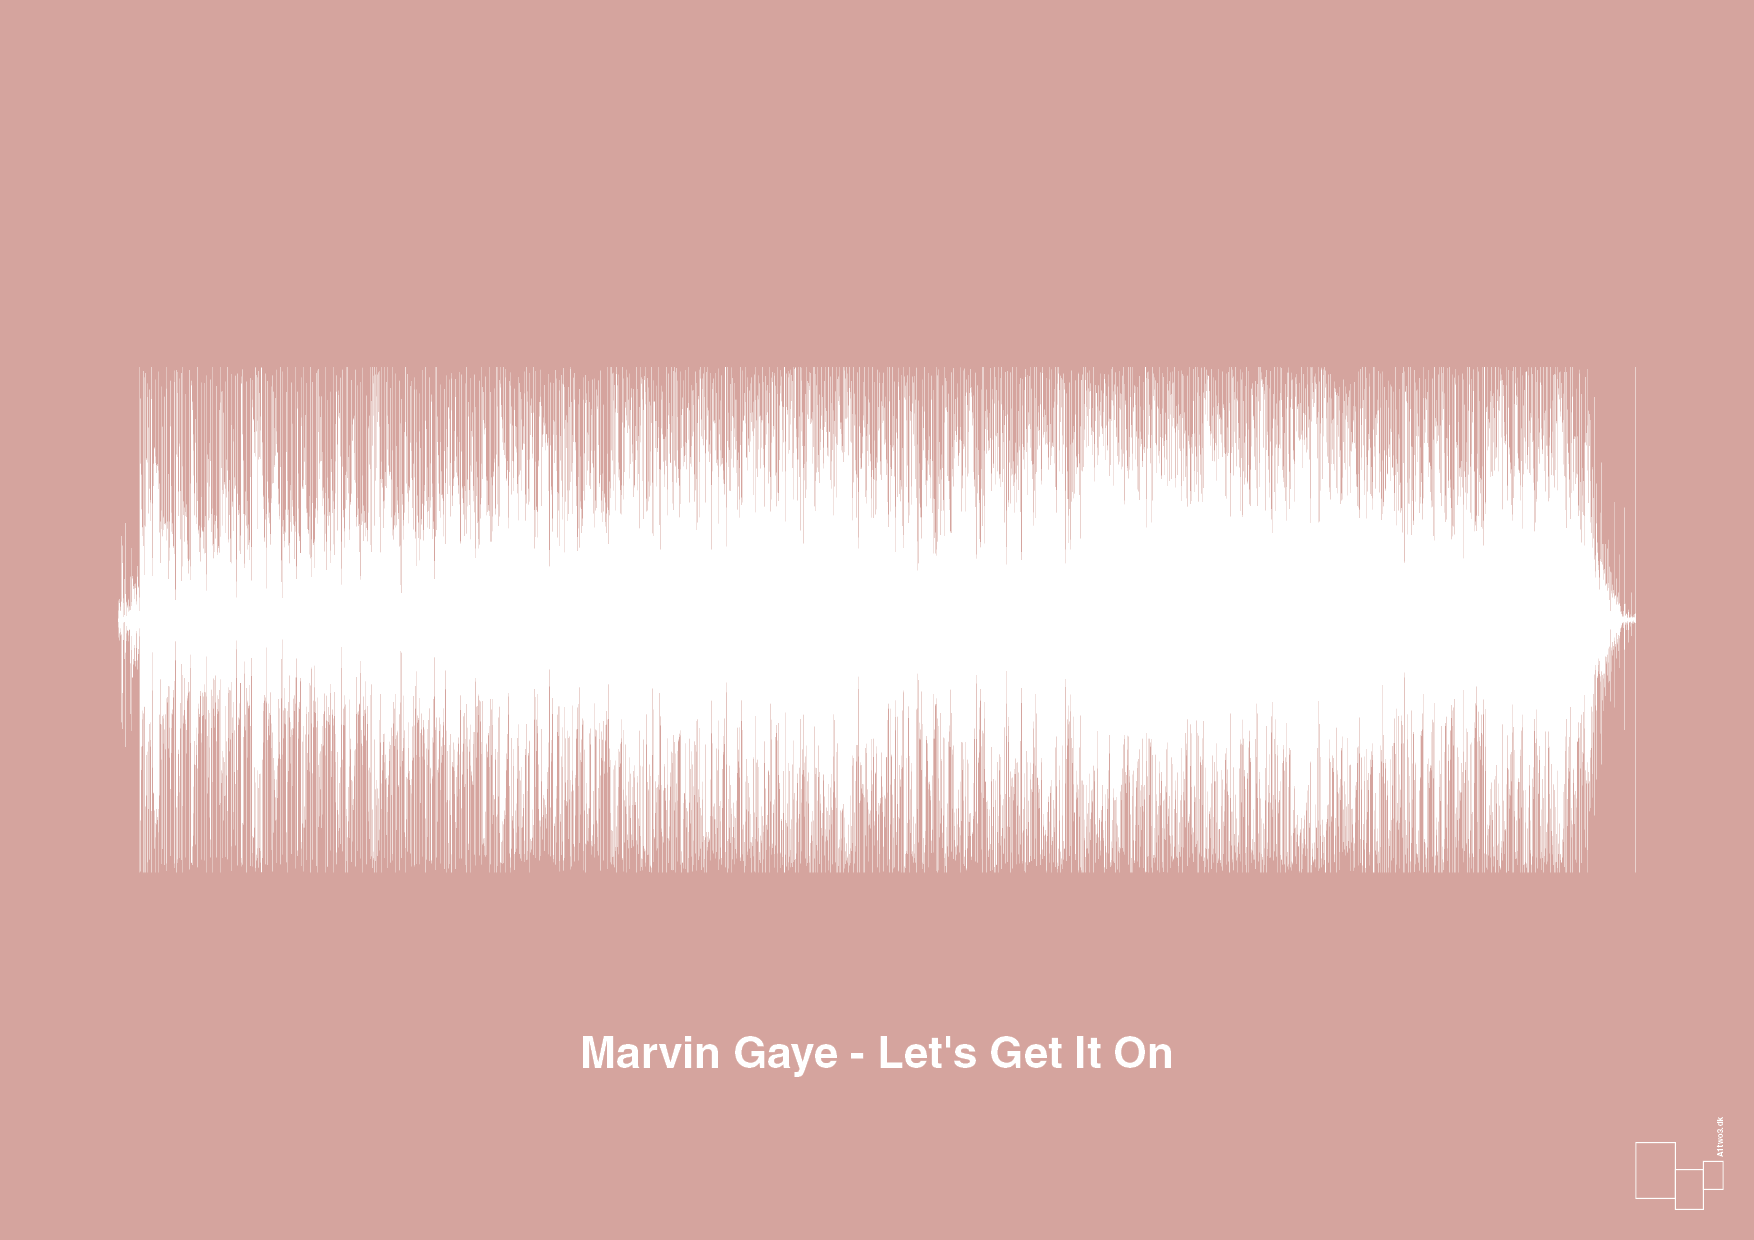 marvin gaye - let's get it on - Plakat med Musik i Bubble Shell